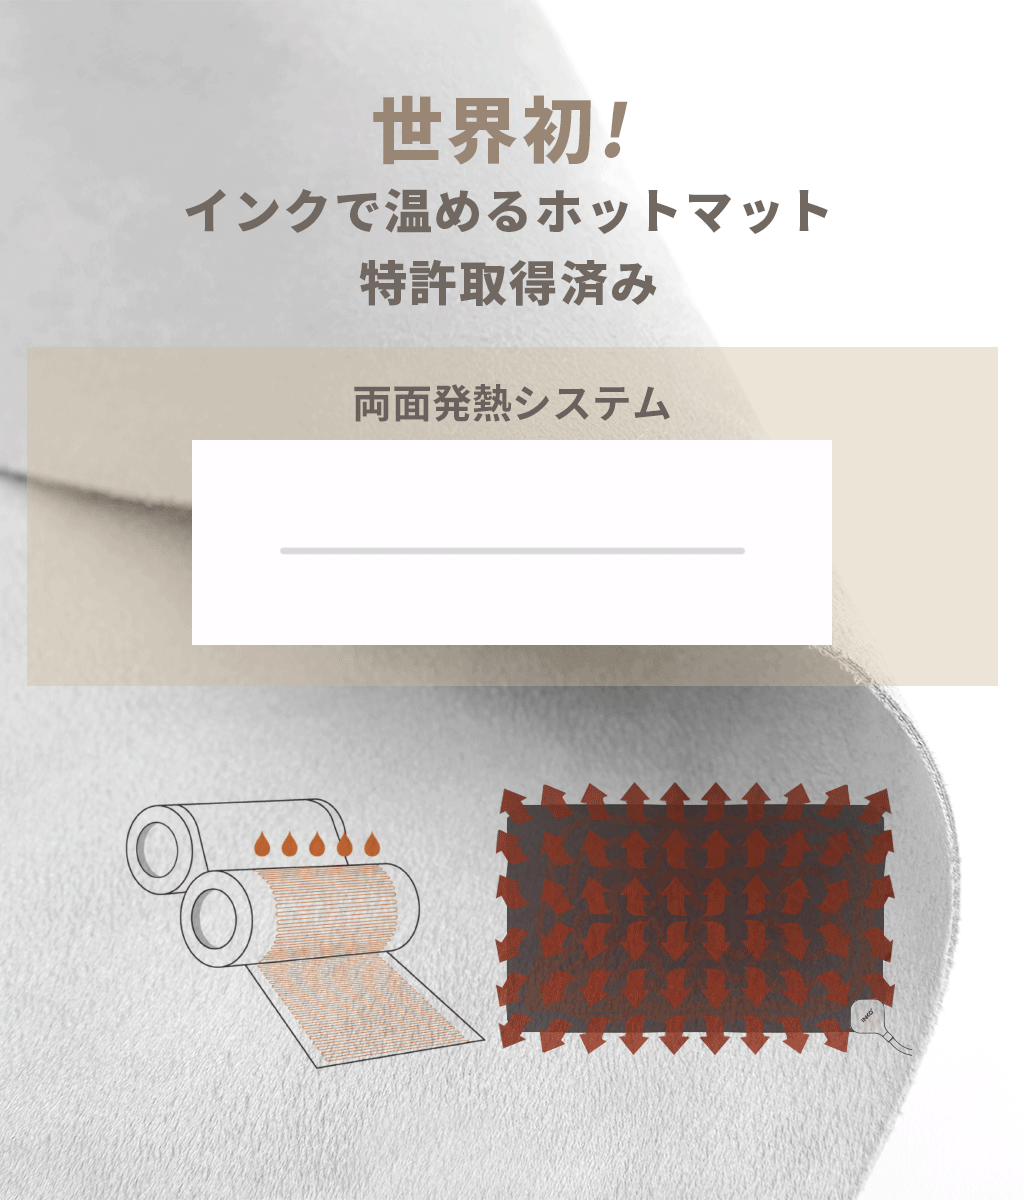 INKO Heating Belt Haramaki - 【公式サイト】インクで温める！INKO ヒーター